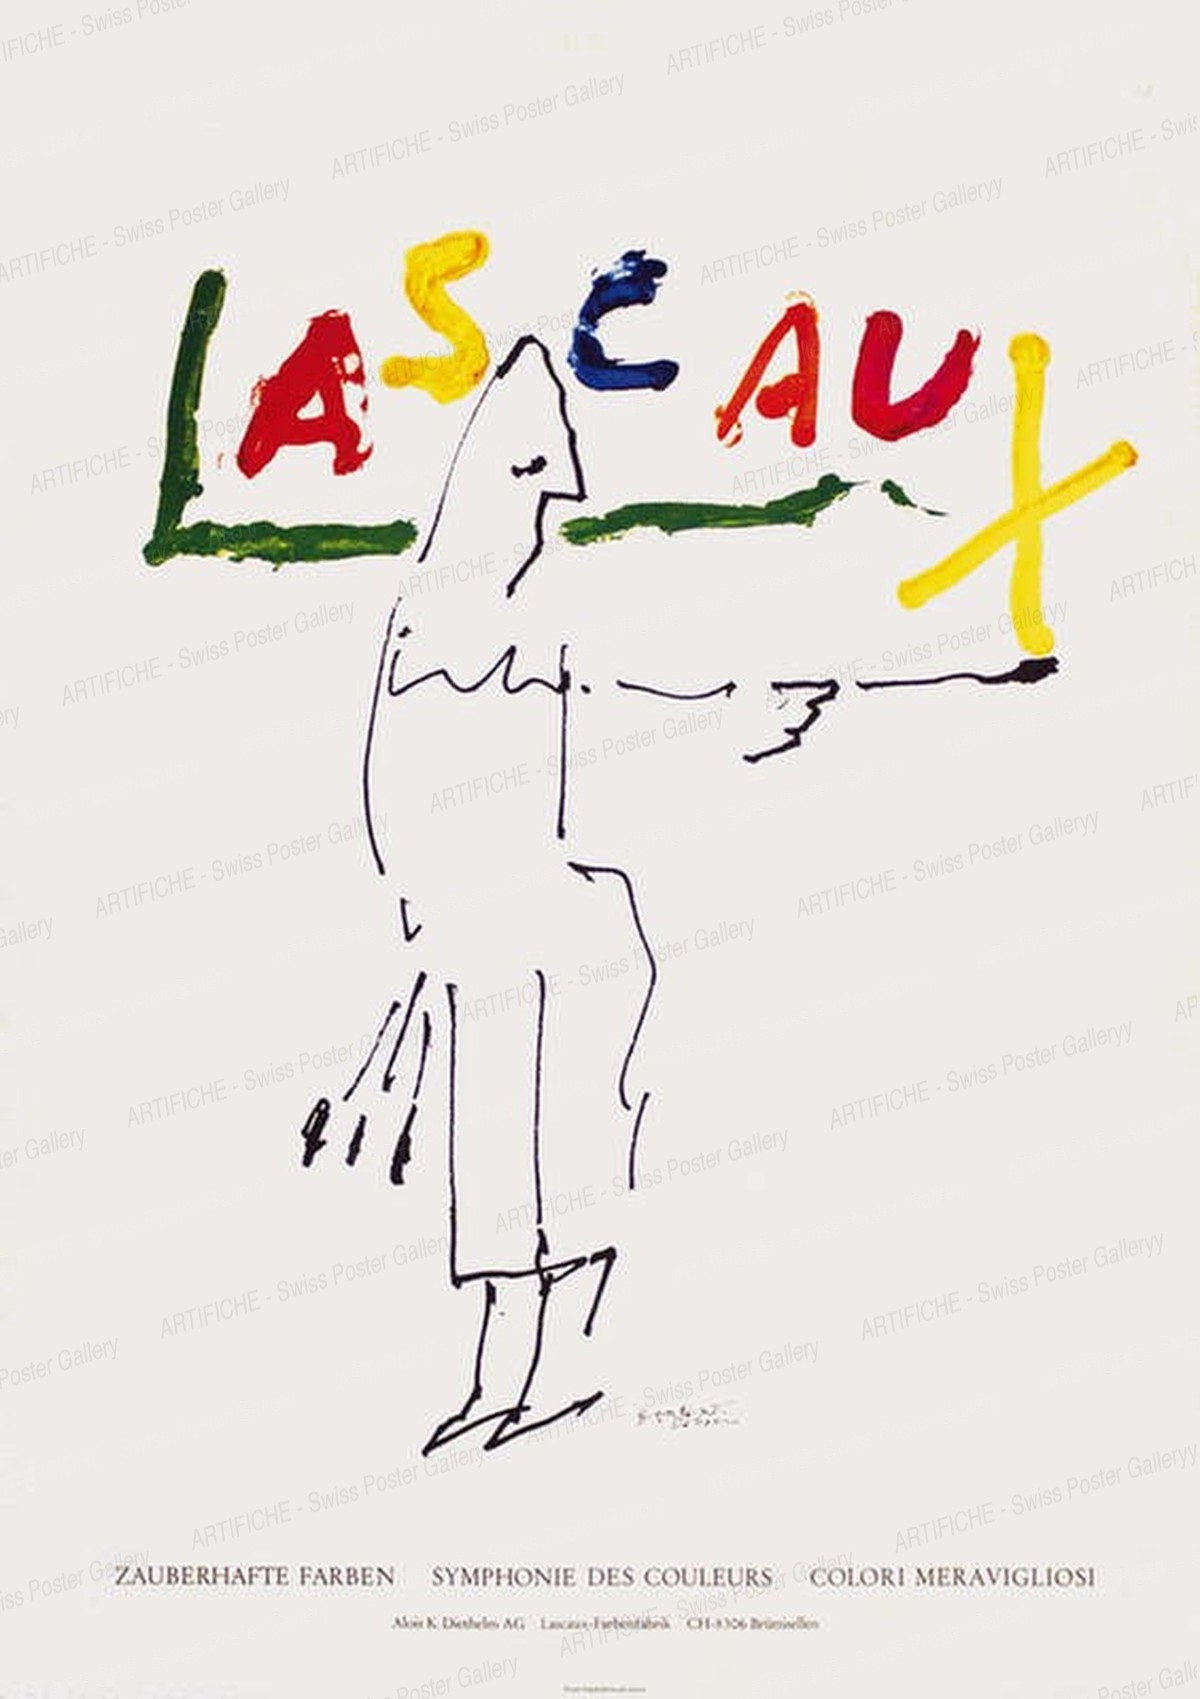 Lascaux, Herbert Leupin